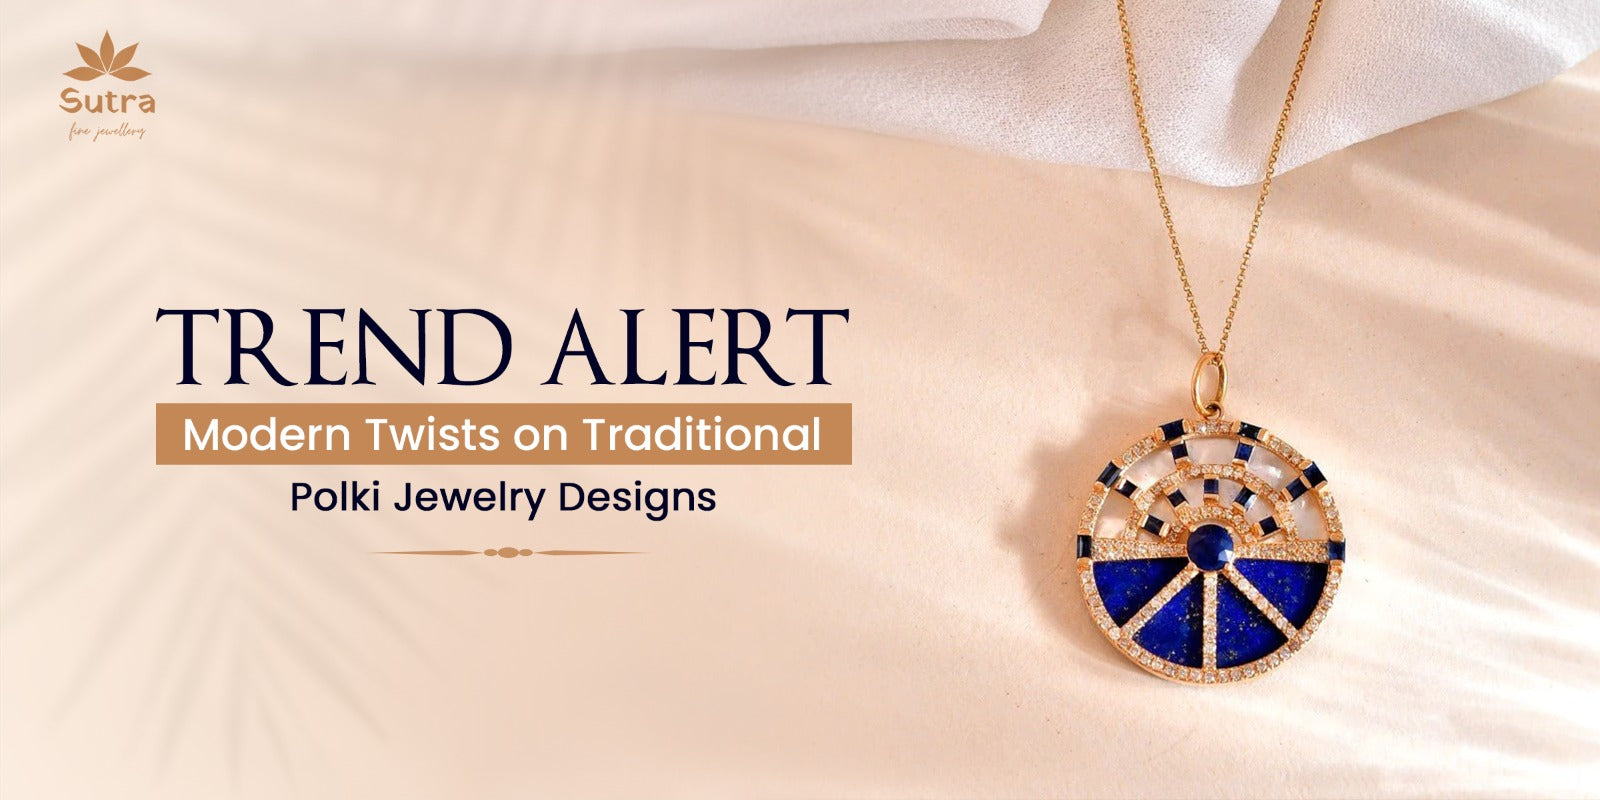 Trend Alert: Modern Twists on Traditional Polki Jewelry Designs